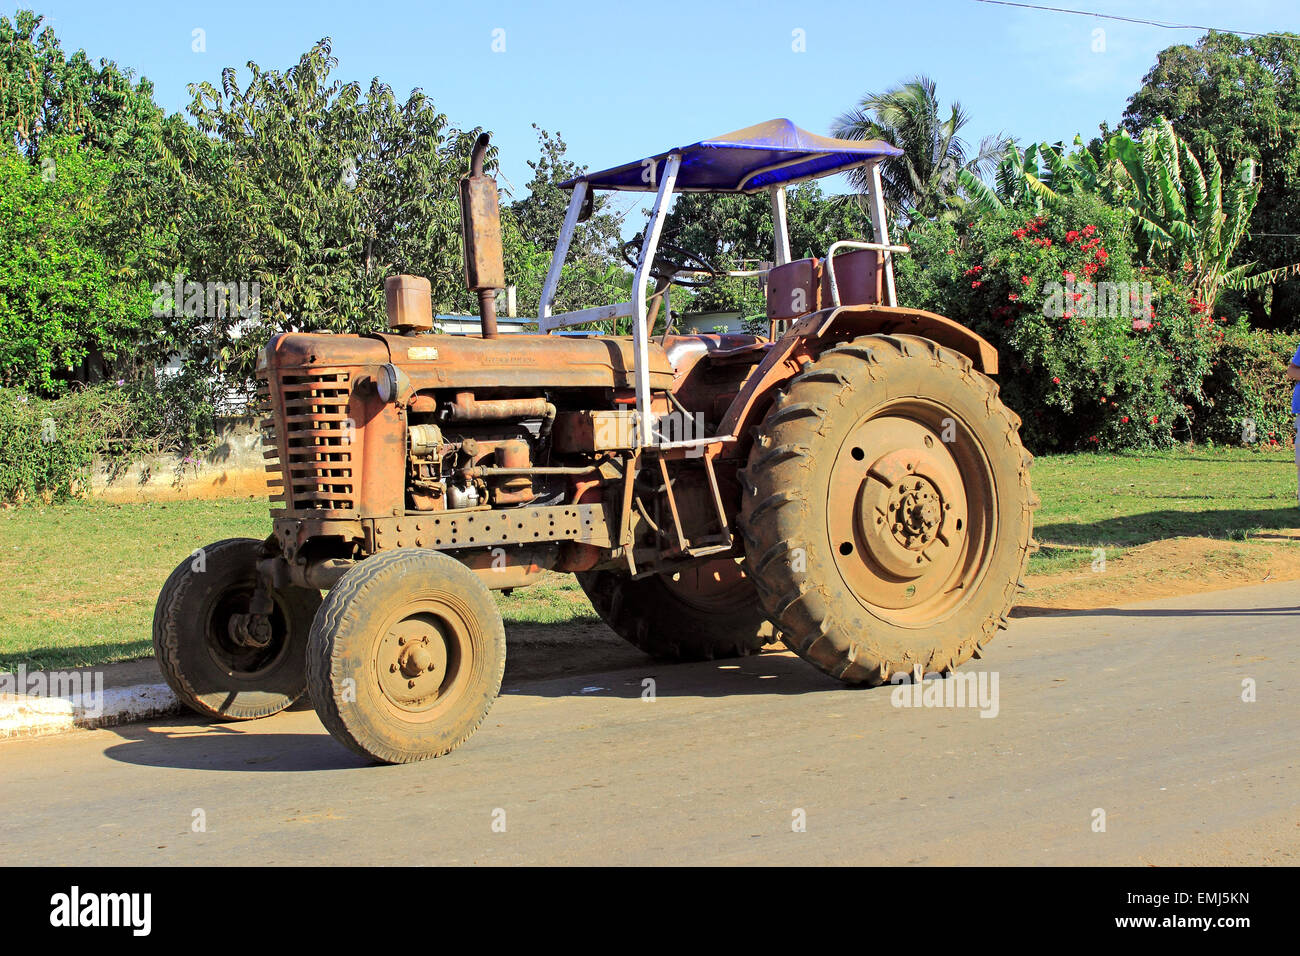 older model Russian made tractor a common farm machine Playa Giron Cuba Stock Photo